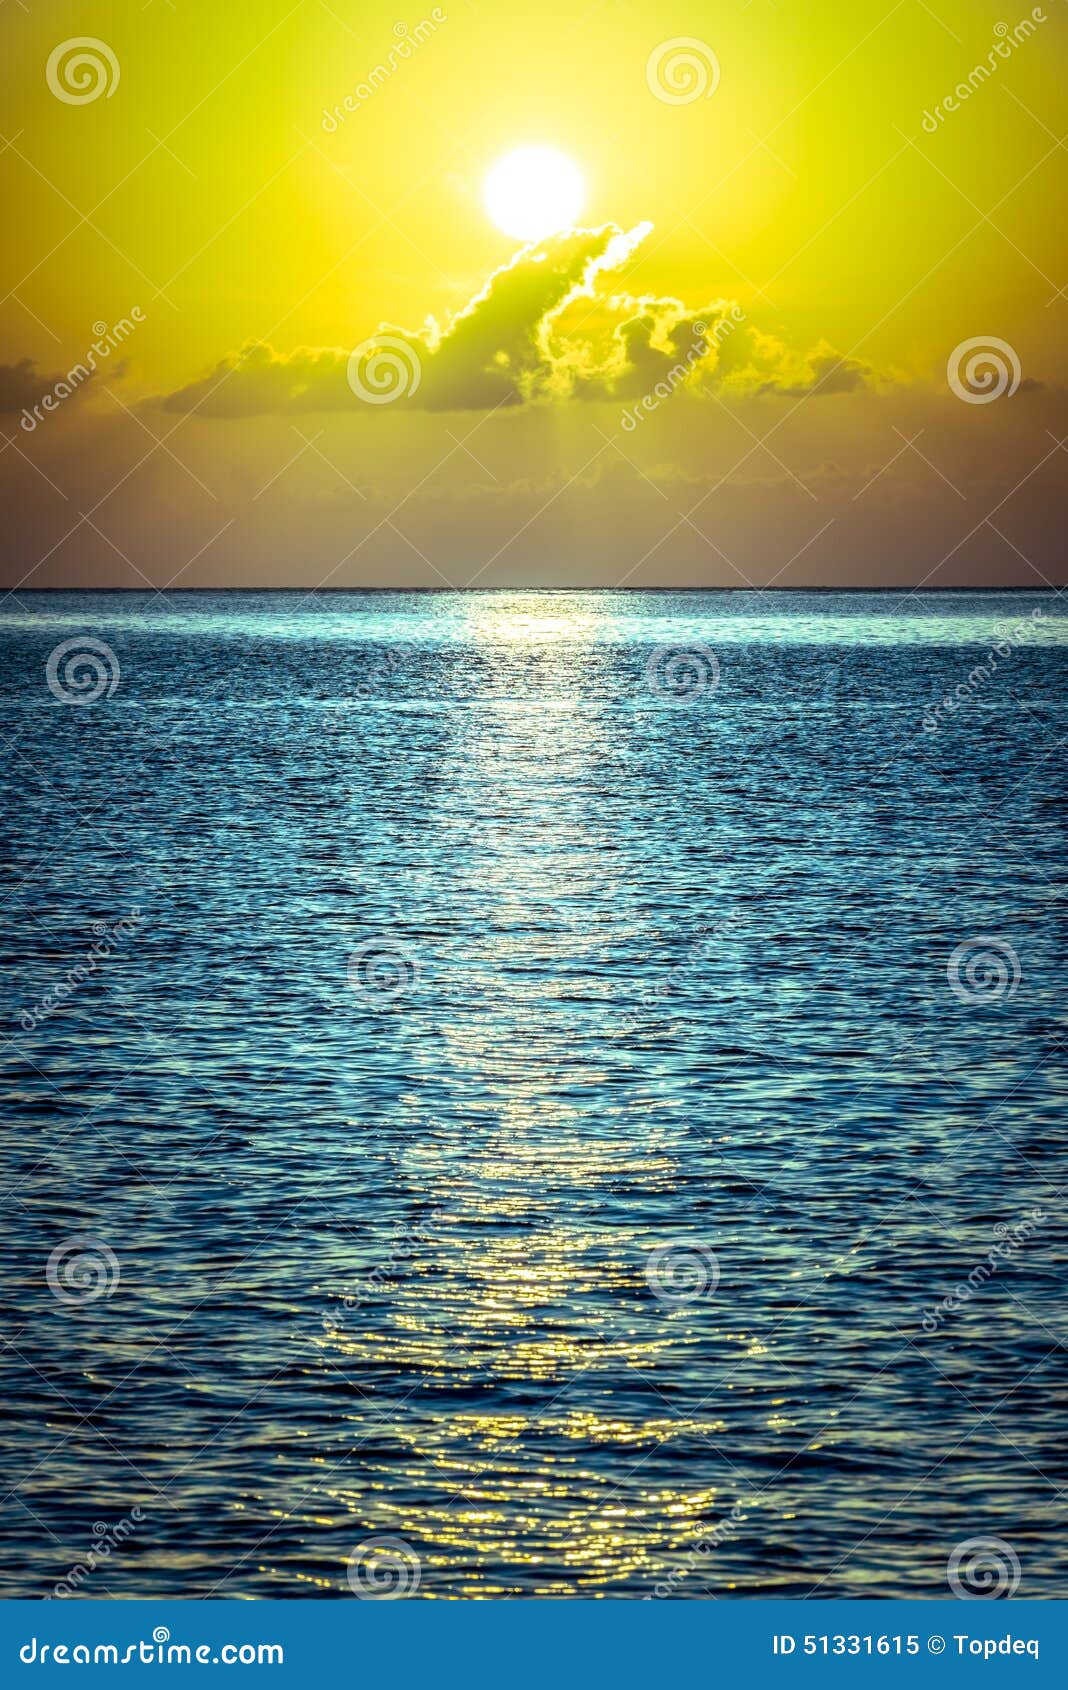 Beautiful Tropical Sunset Ocean Background Stock Image - Image of ocean ...